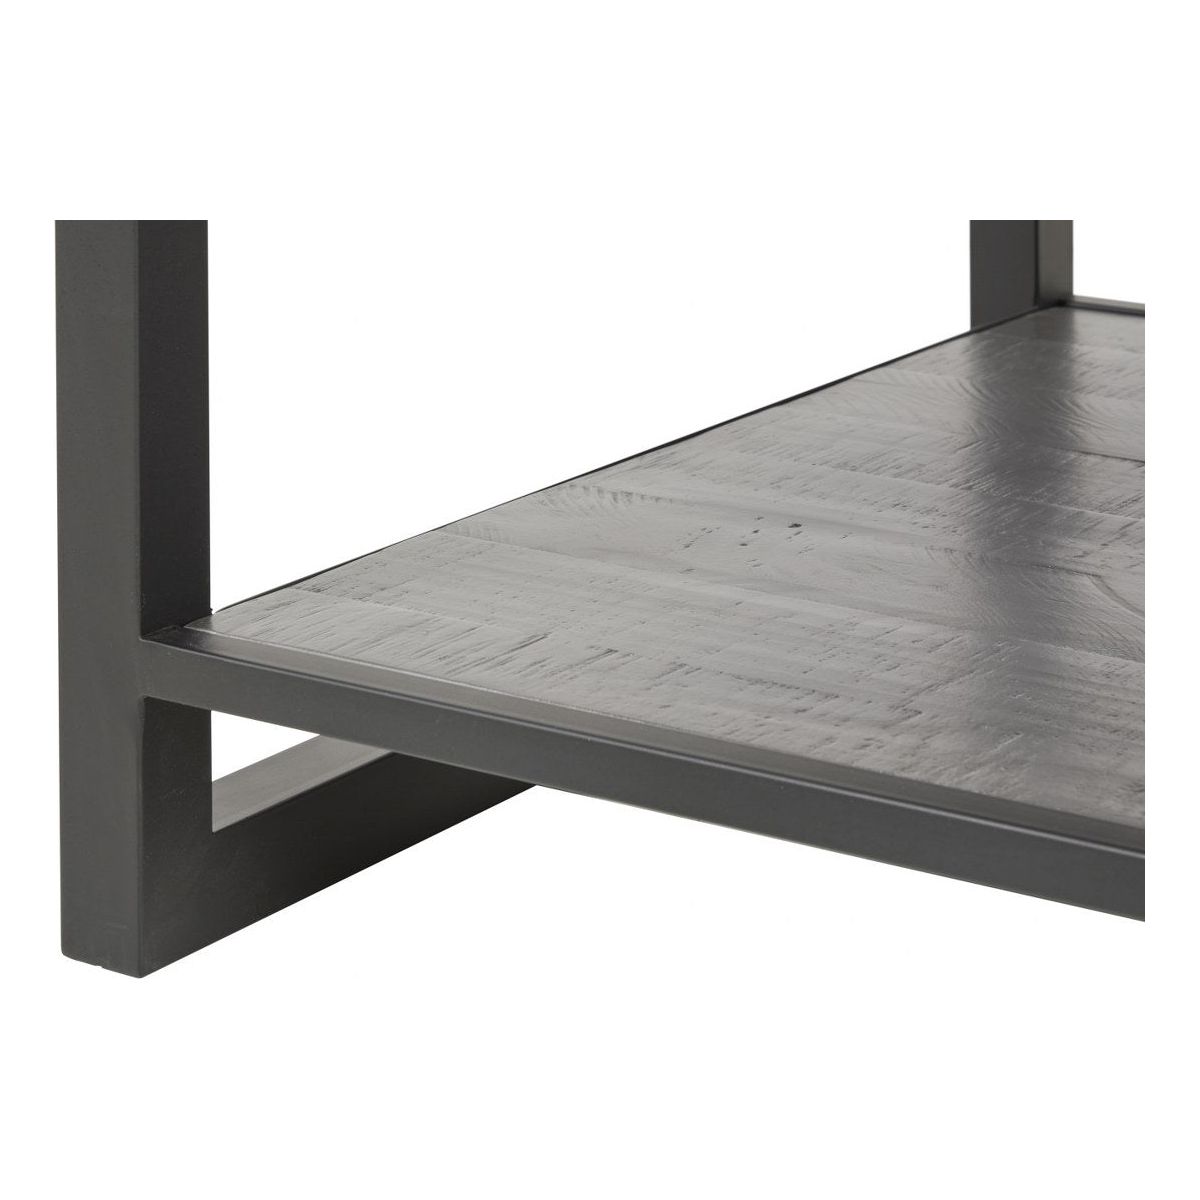 Coffee table | Furniture series Micras | Dark gray, black | 120x